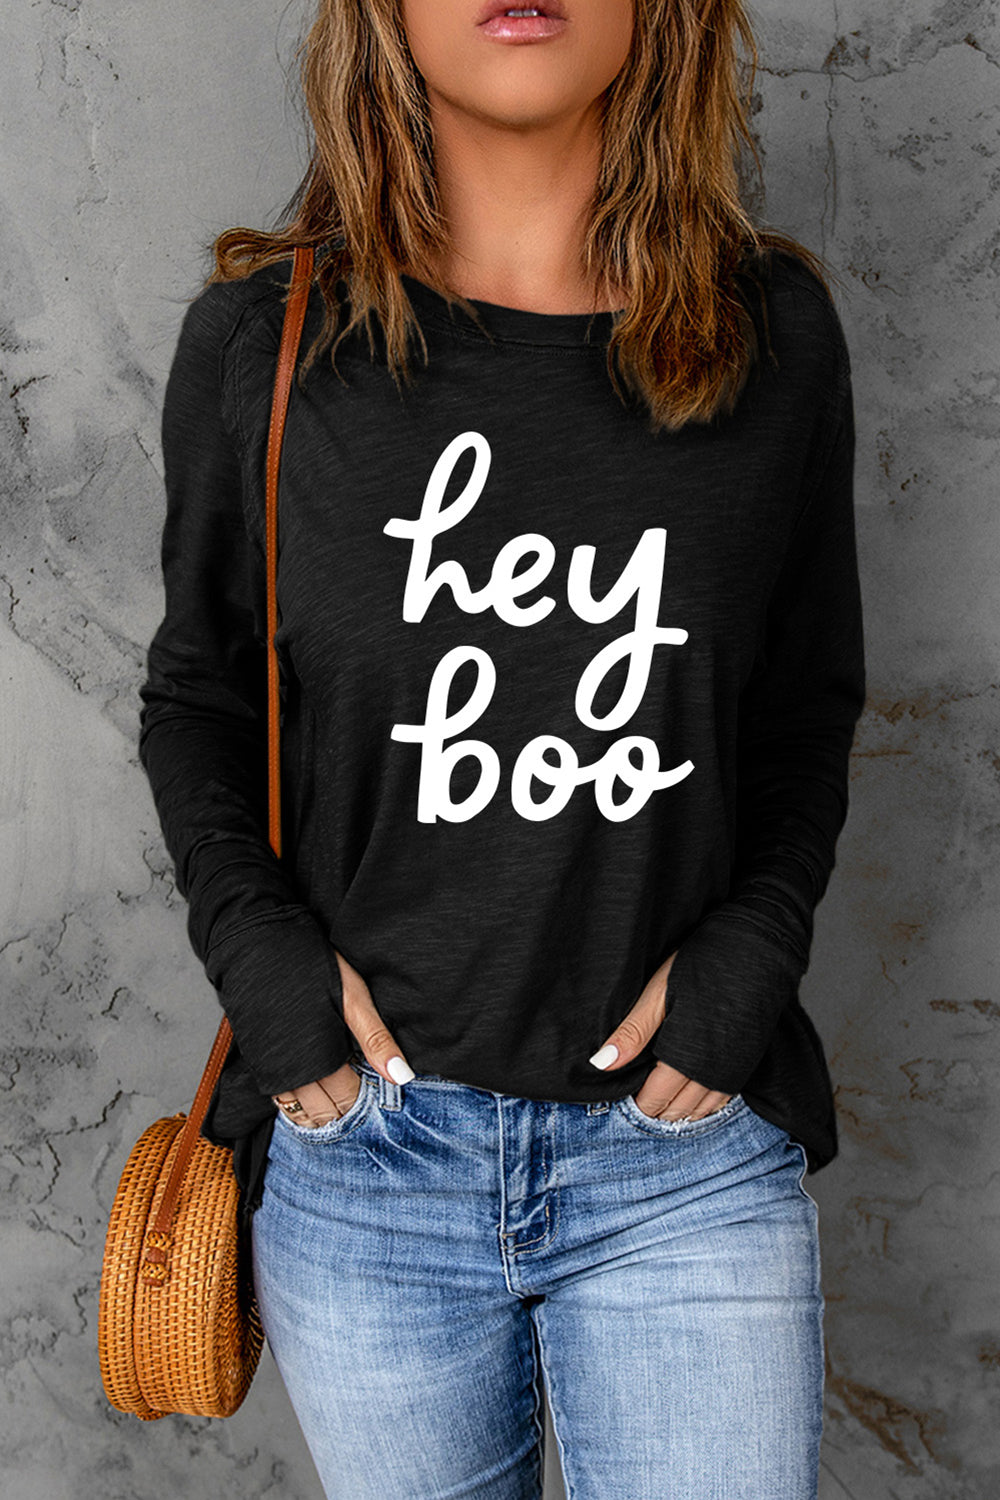 HEY BOO Graphic T-Shirt - Body By J'ne